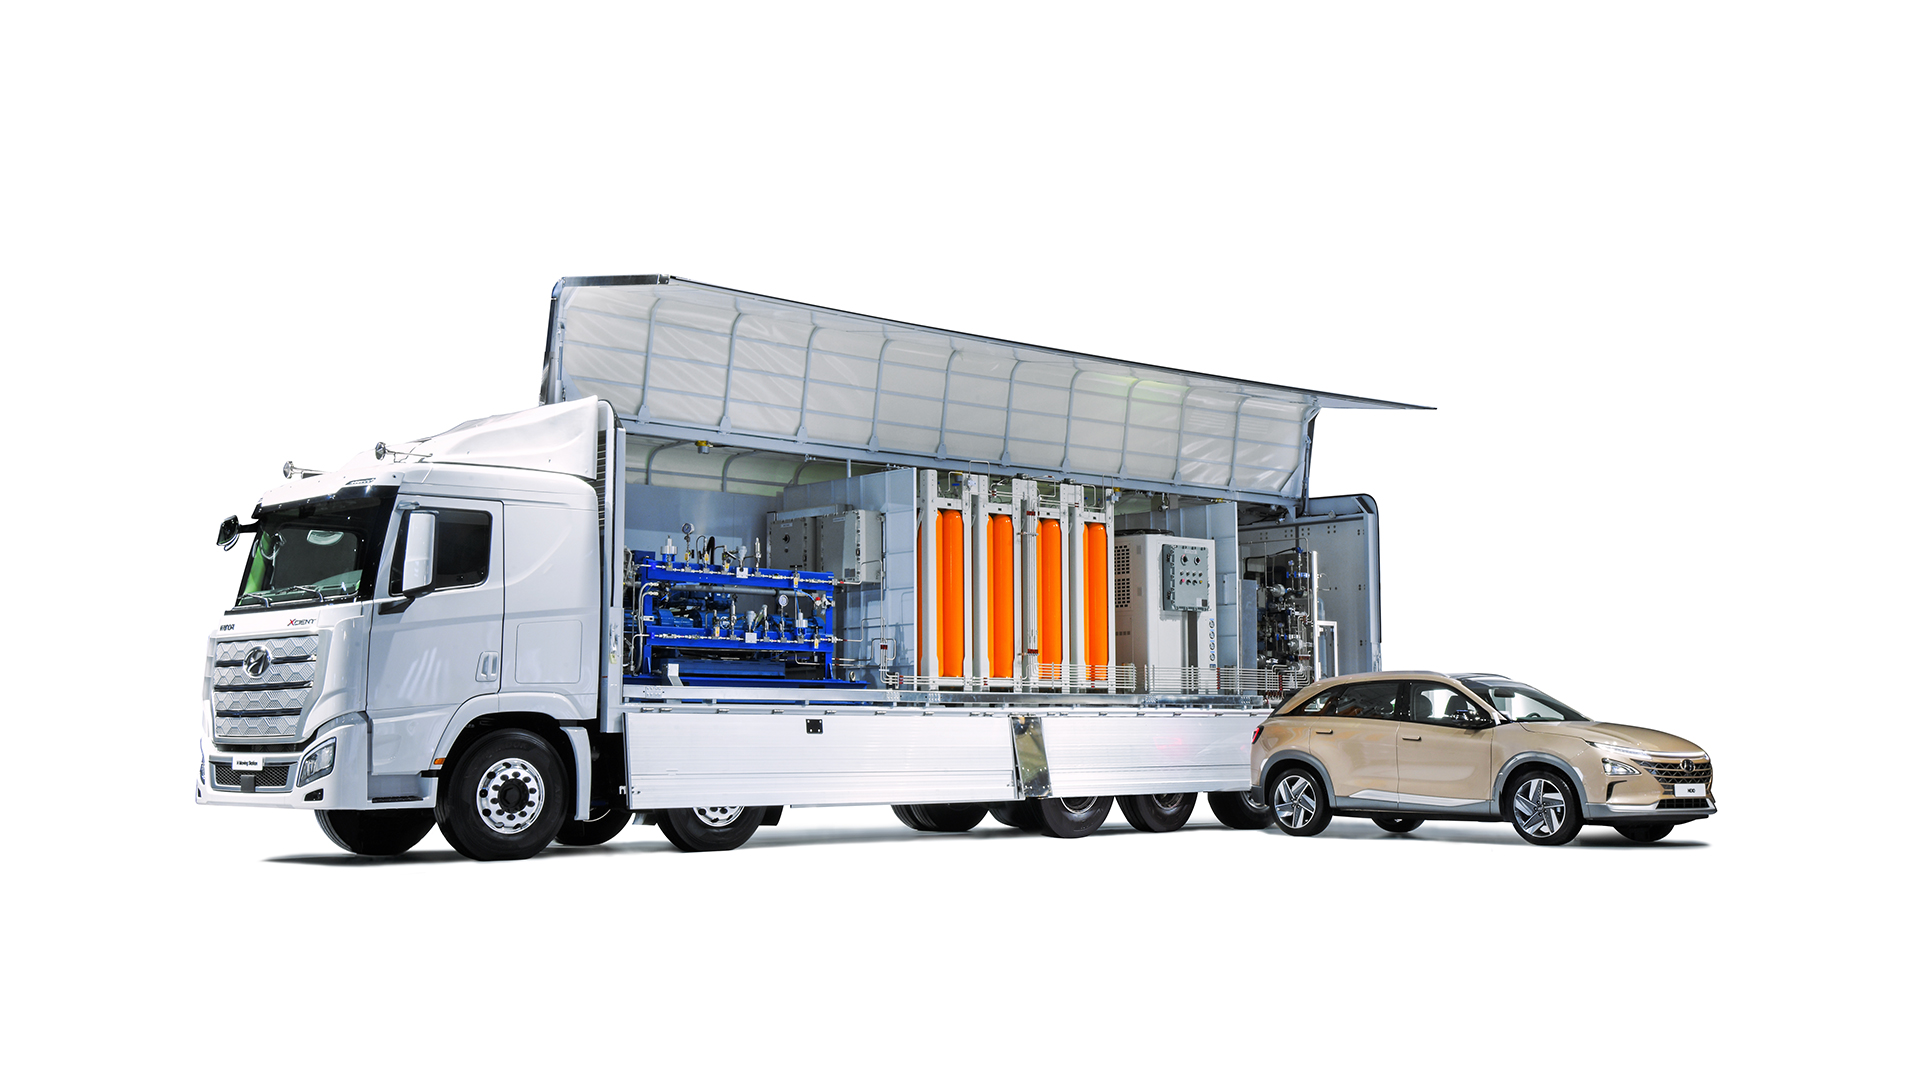 Hyundai Motor Group's Mobile Hydrogen Refueling Station